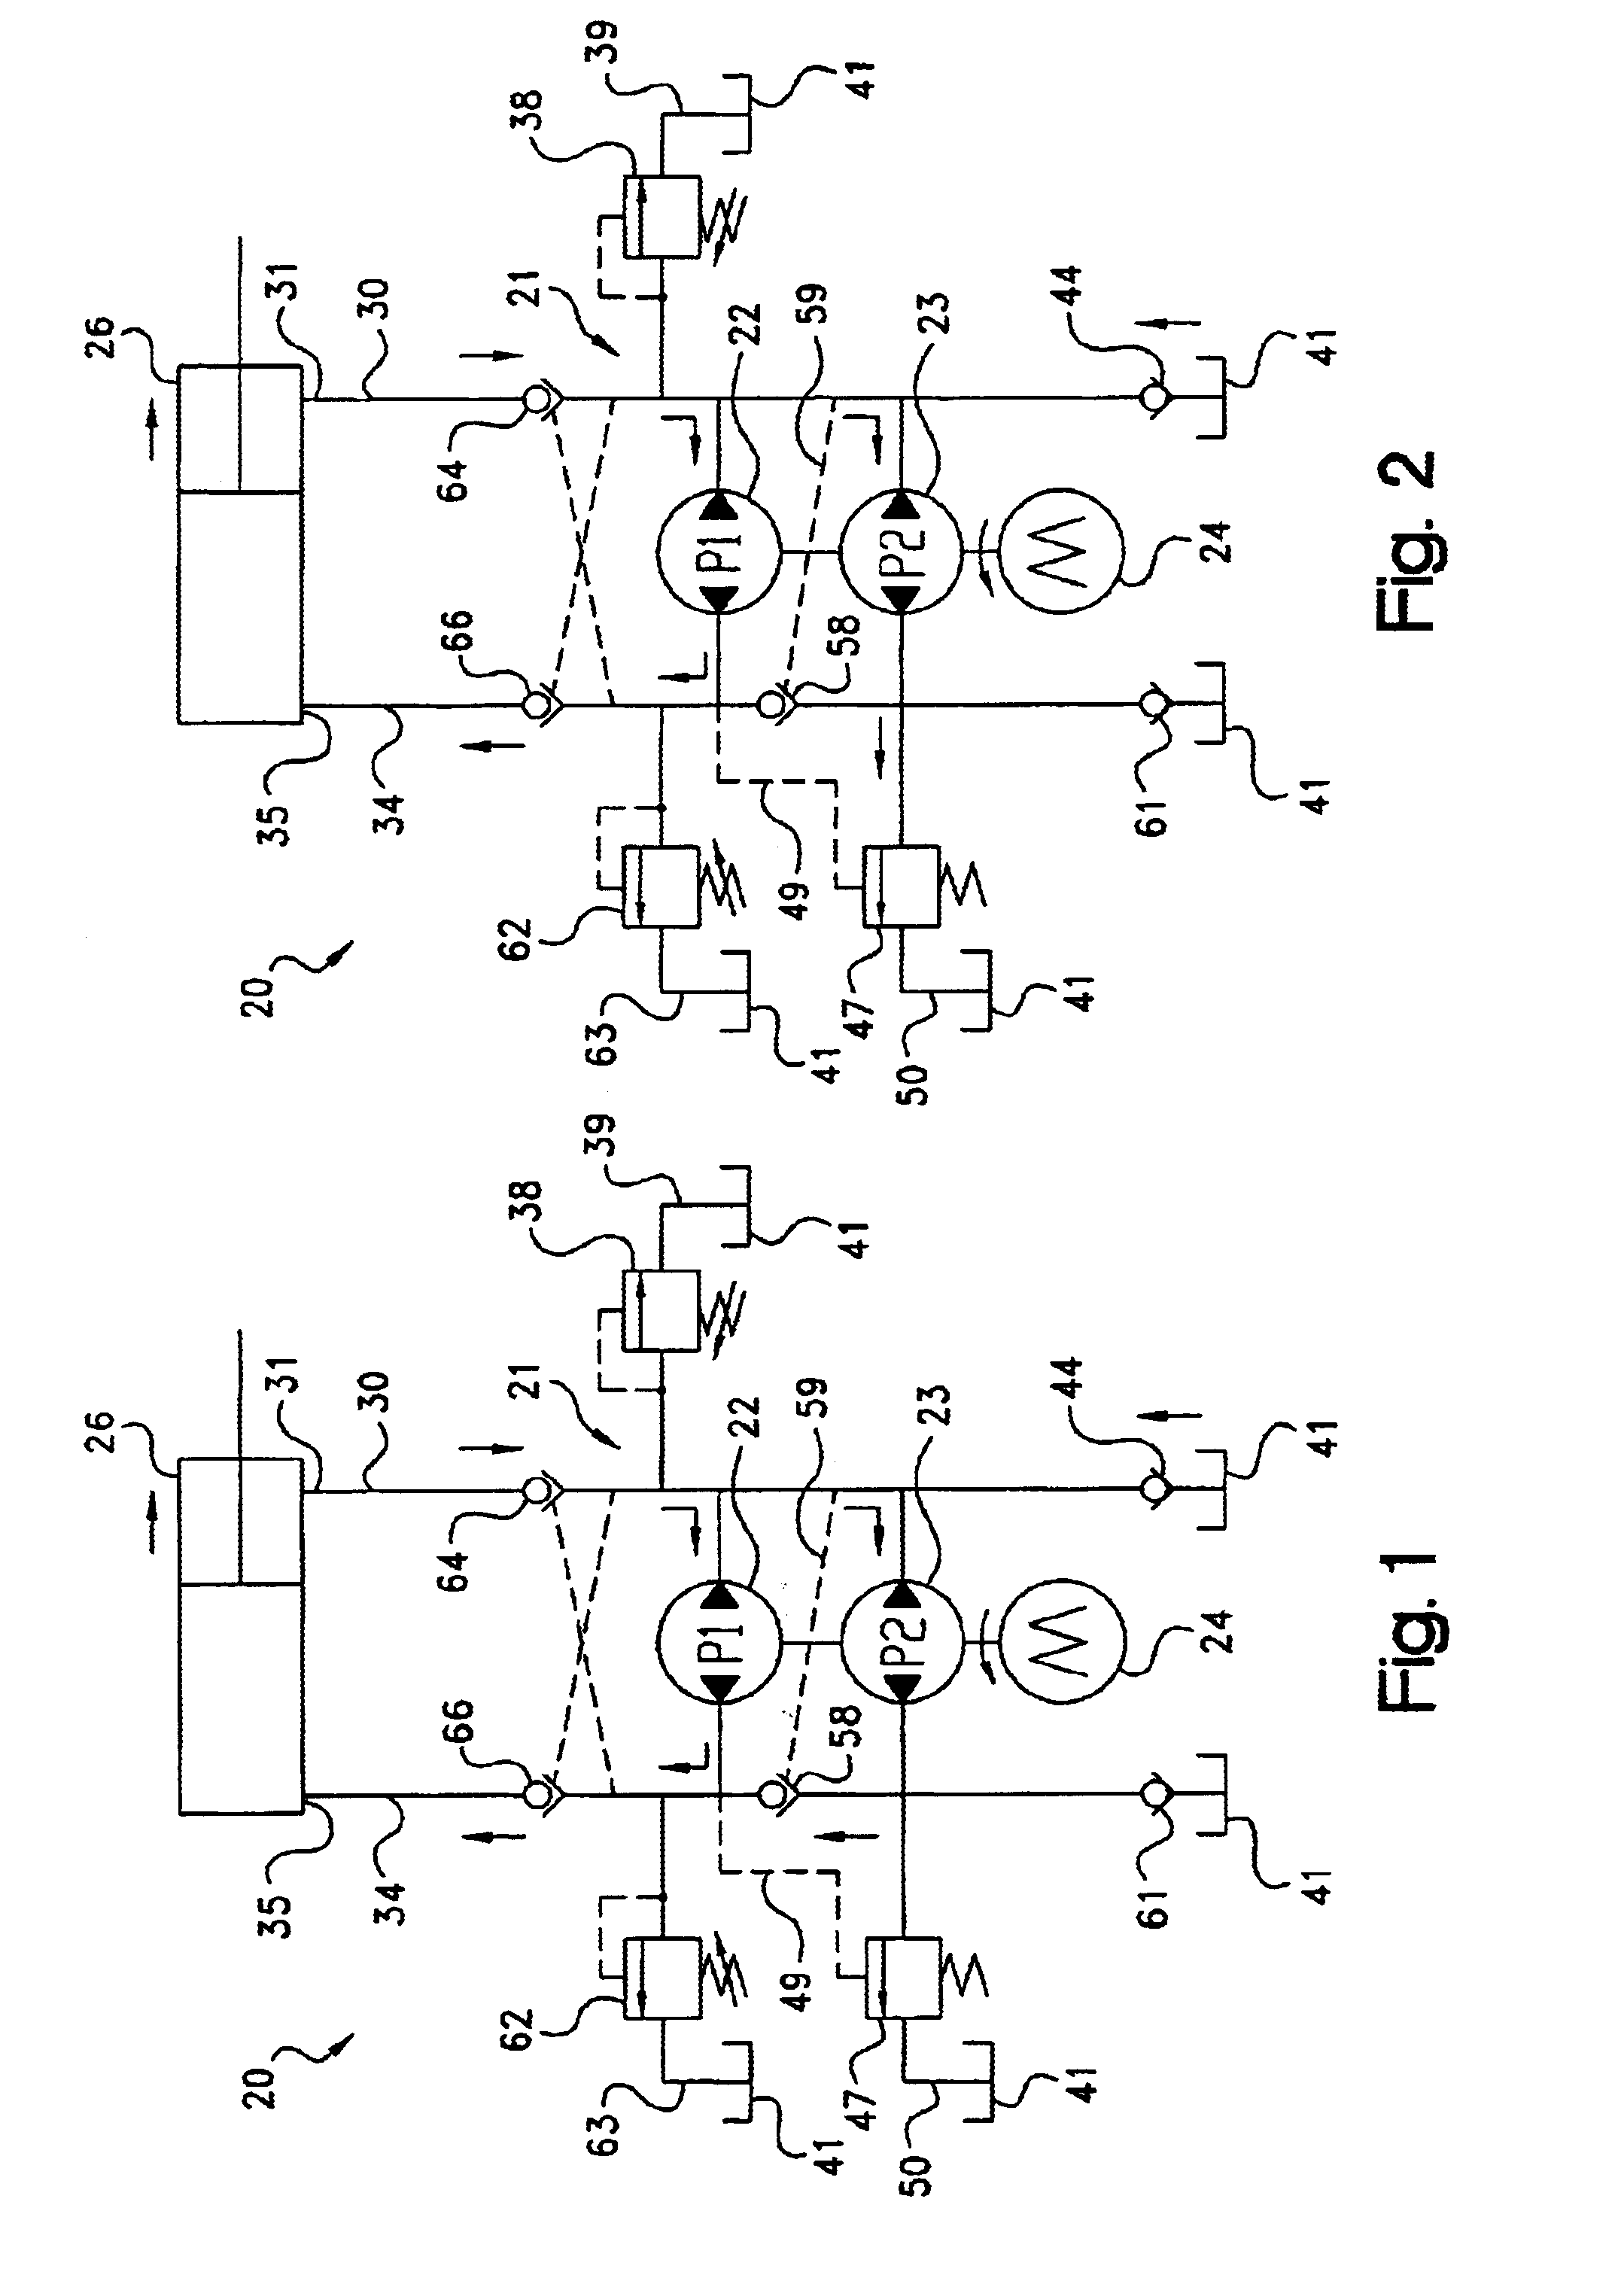 Bi-rotational, two-stage hydraulic system